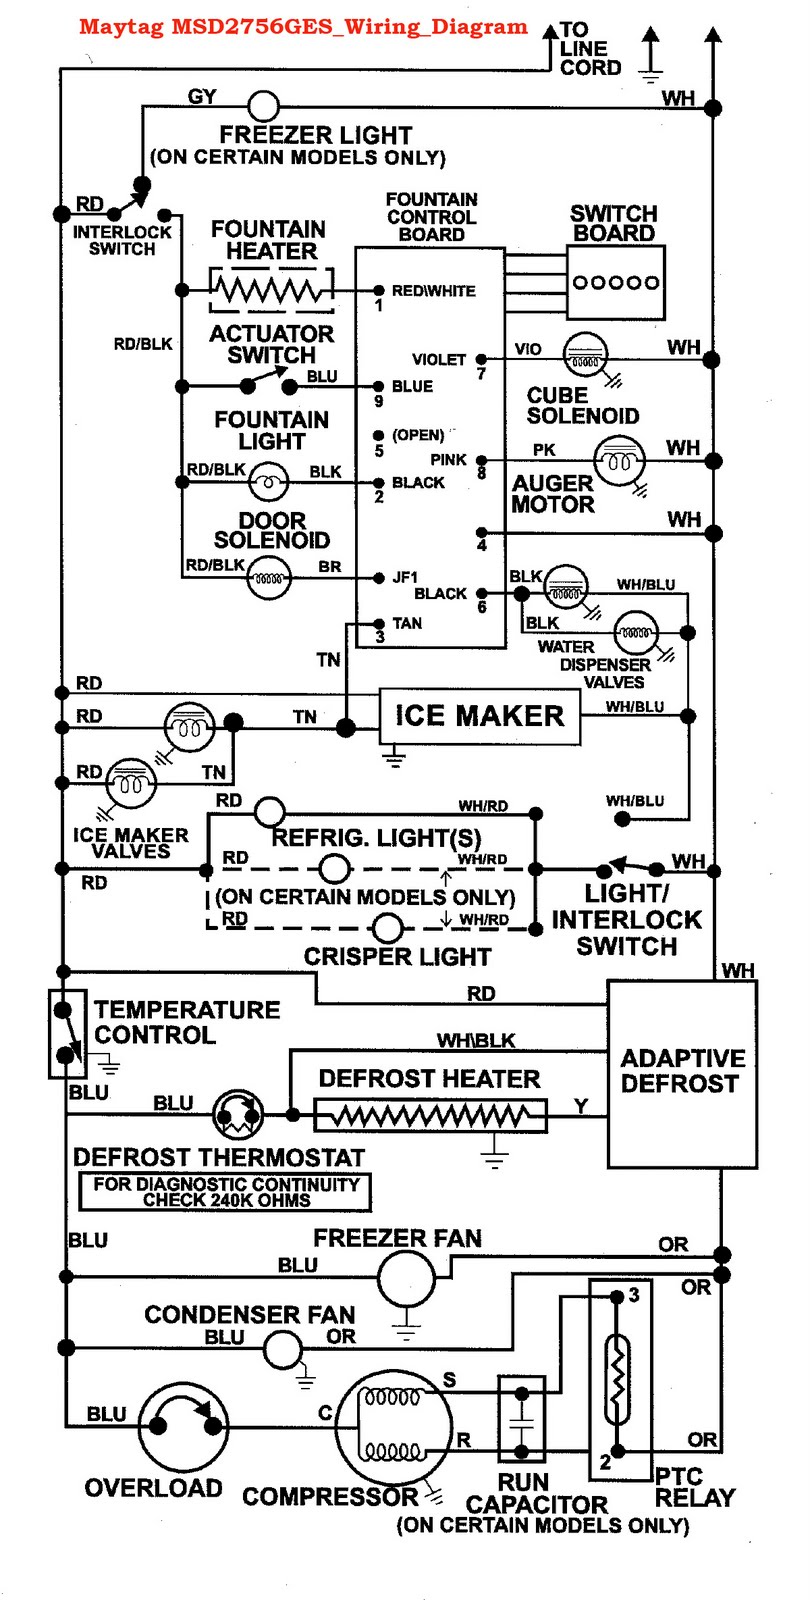 wiring diagram admiral fridge